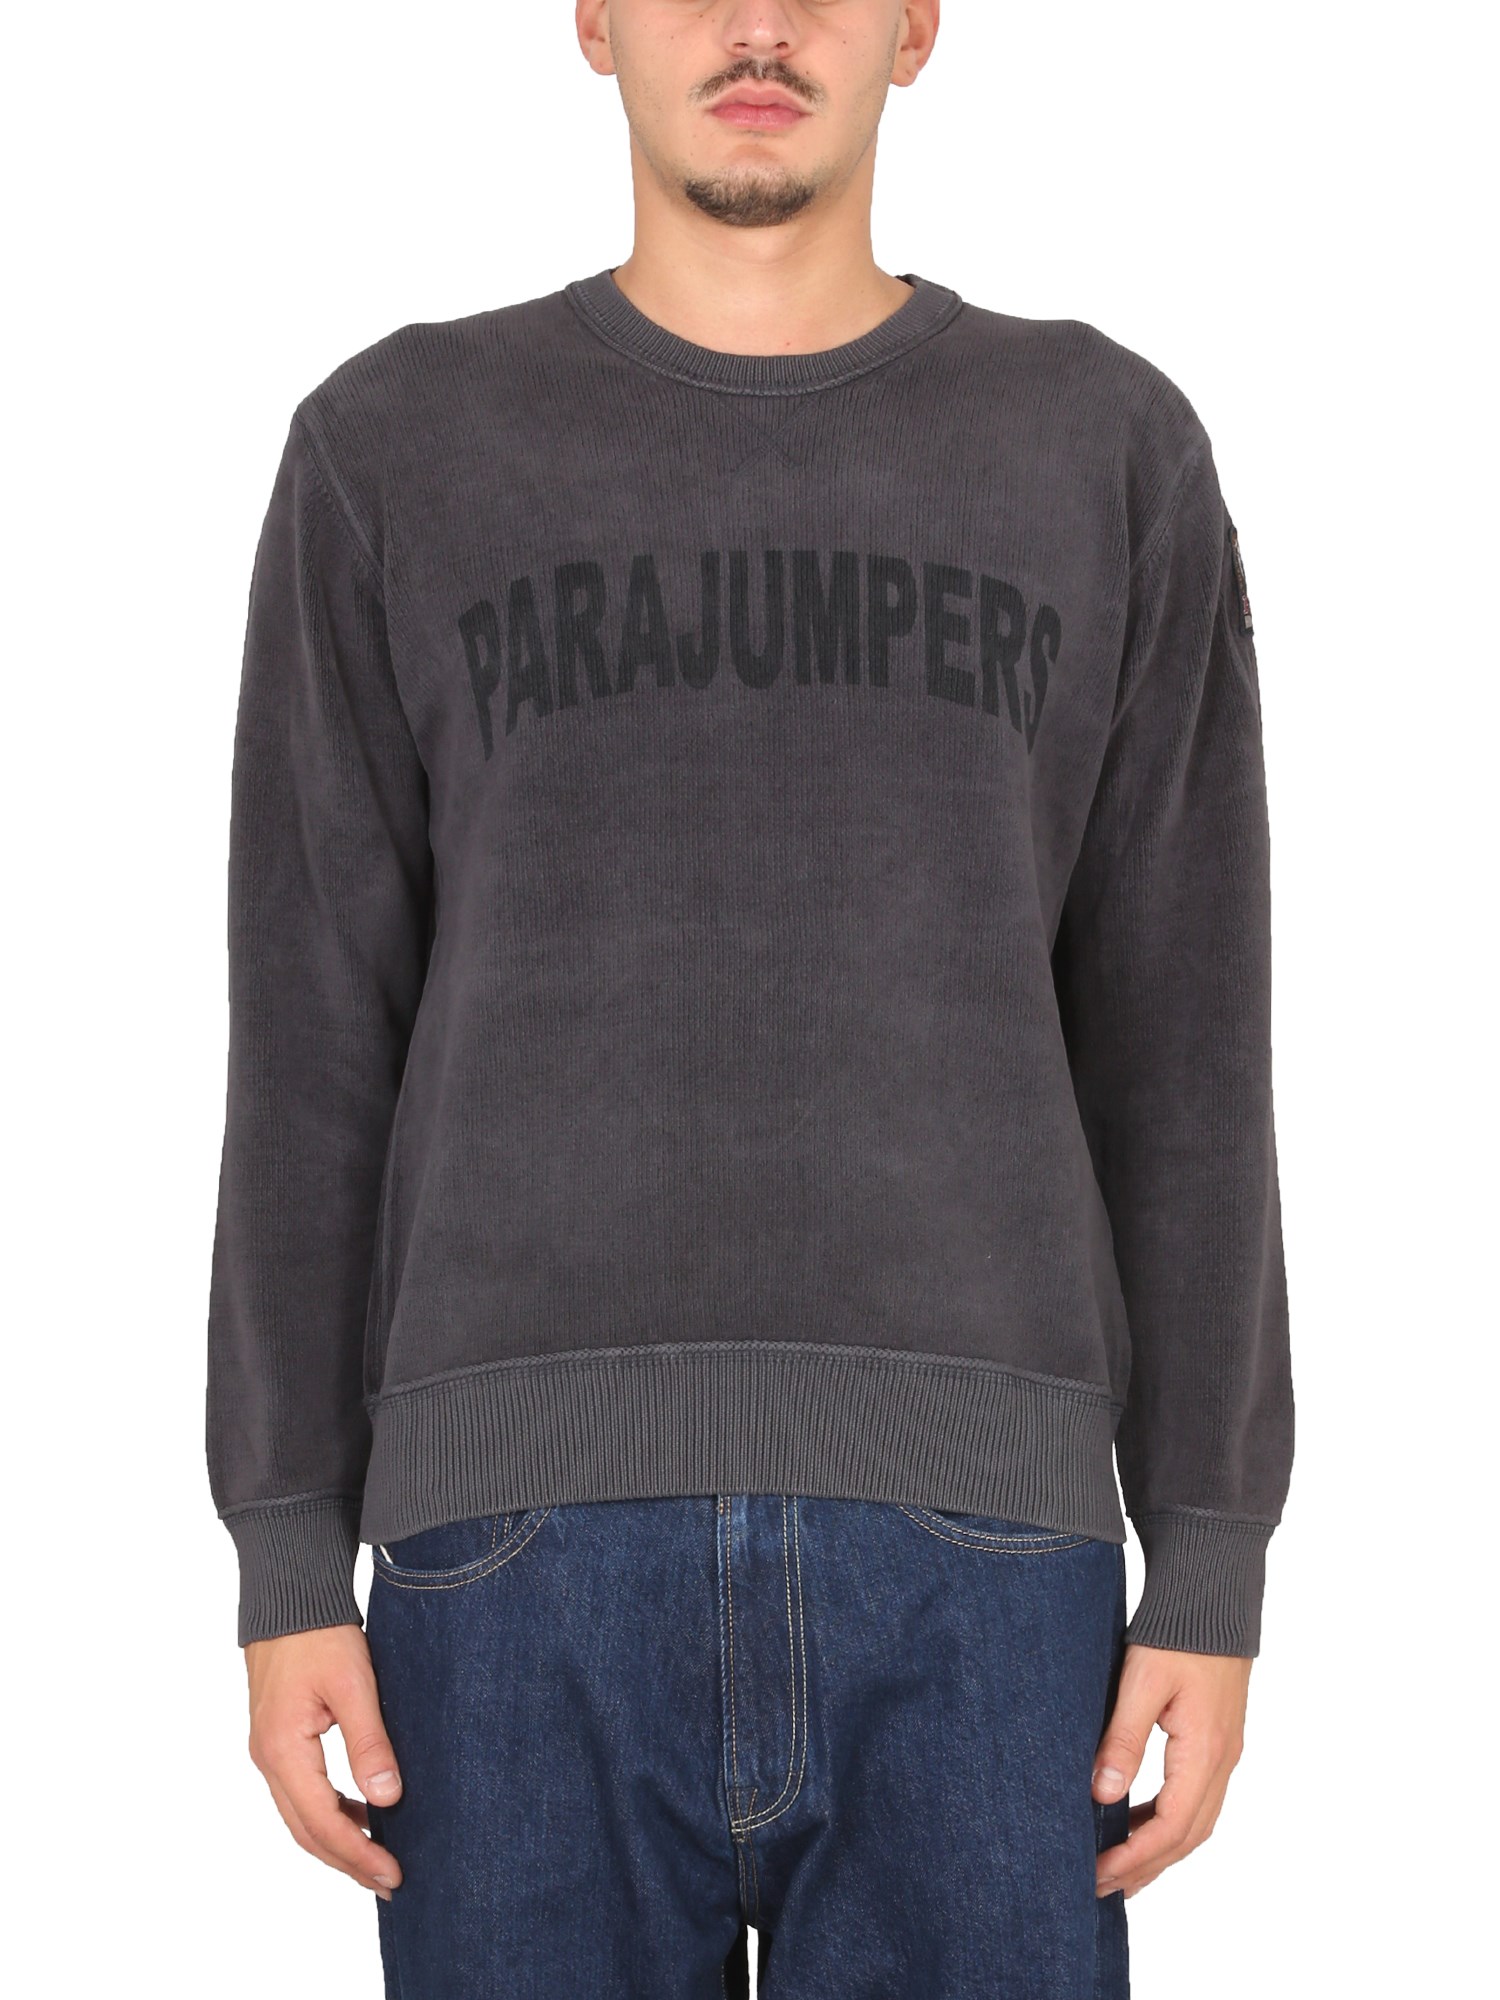 parajumpers sweatshirt with logo